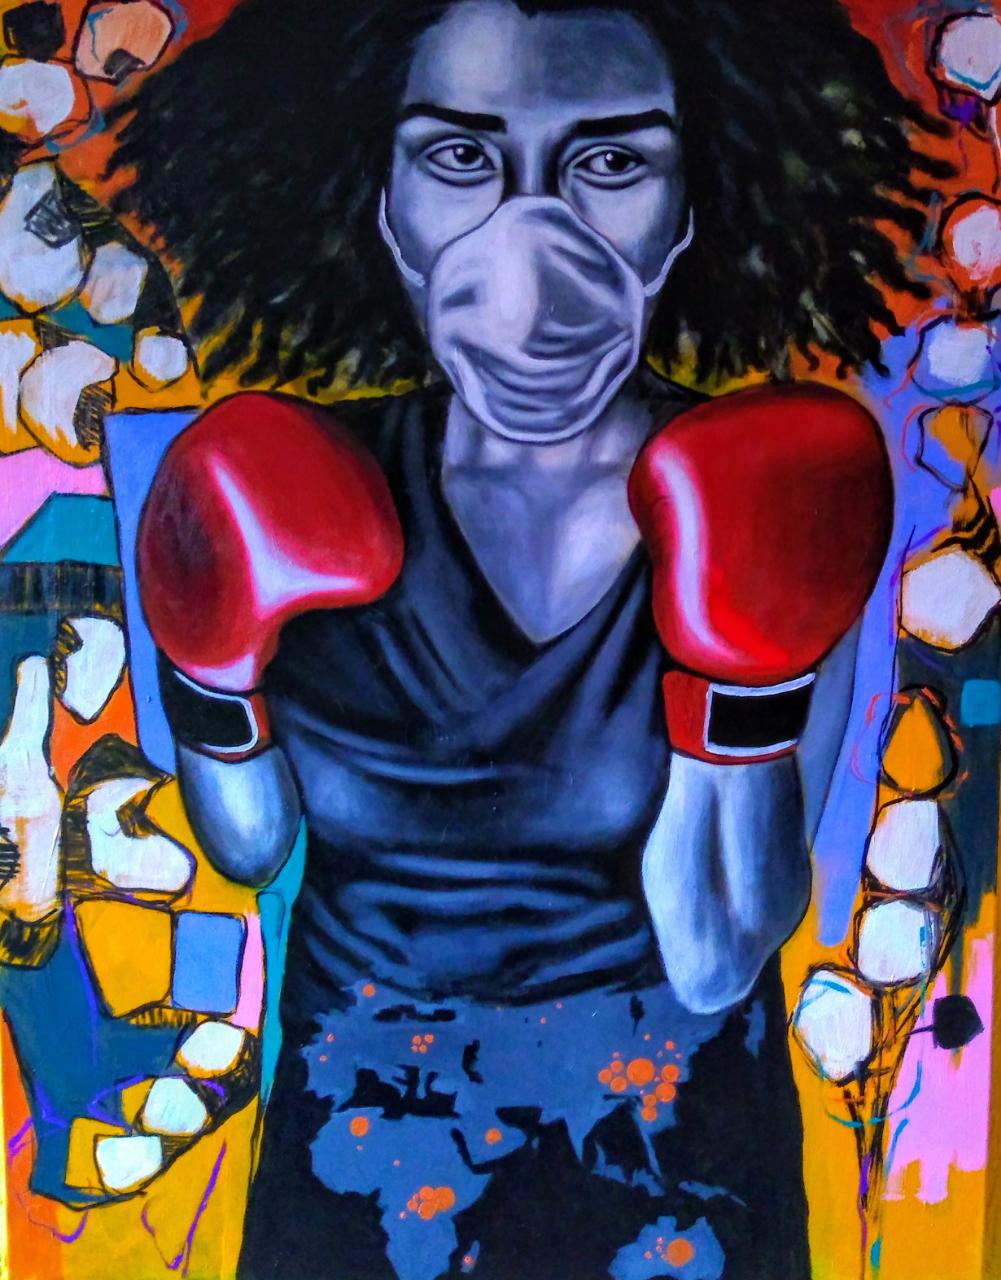 Quadro do artista congolês Lavi Israël, radicado no Brasil, inspirada na pandemia de coronavírus